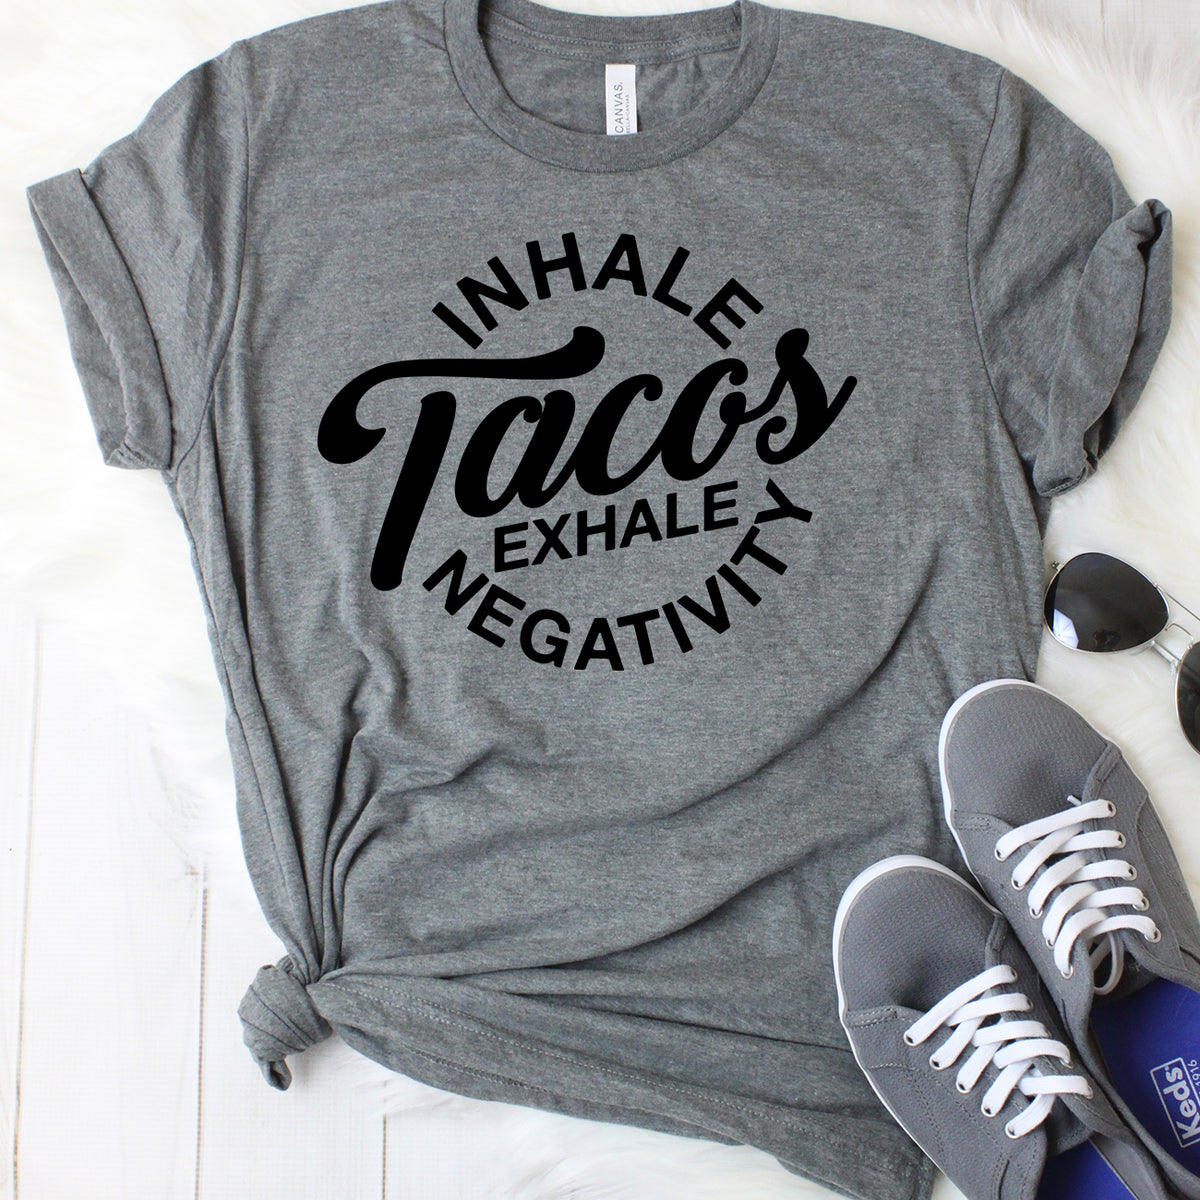 Inhale Tacos Exhale Negativity Dark Grey T-Shirt